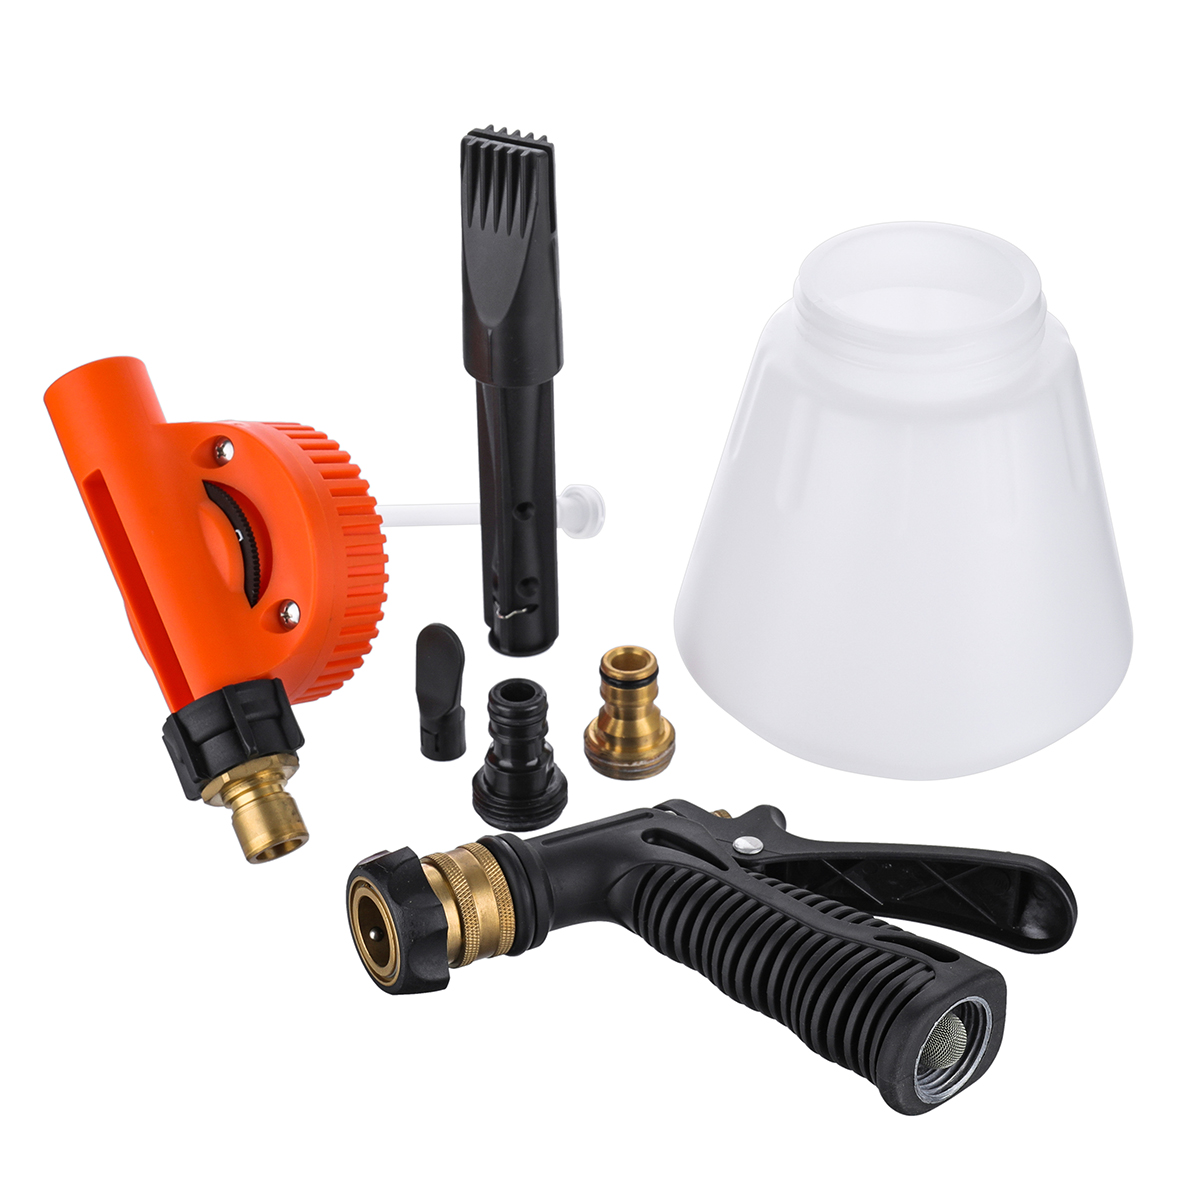 MATCC-Car-Foam-Gun-Foam-and-Adjustable-Car-Wash-Sprayer-with-Adjustment-Ratio-Dial-Foam-Sprayer-Fit--1388324-11